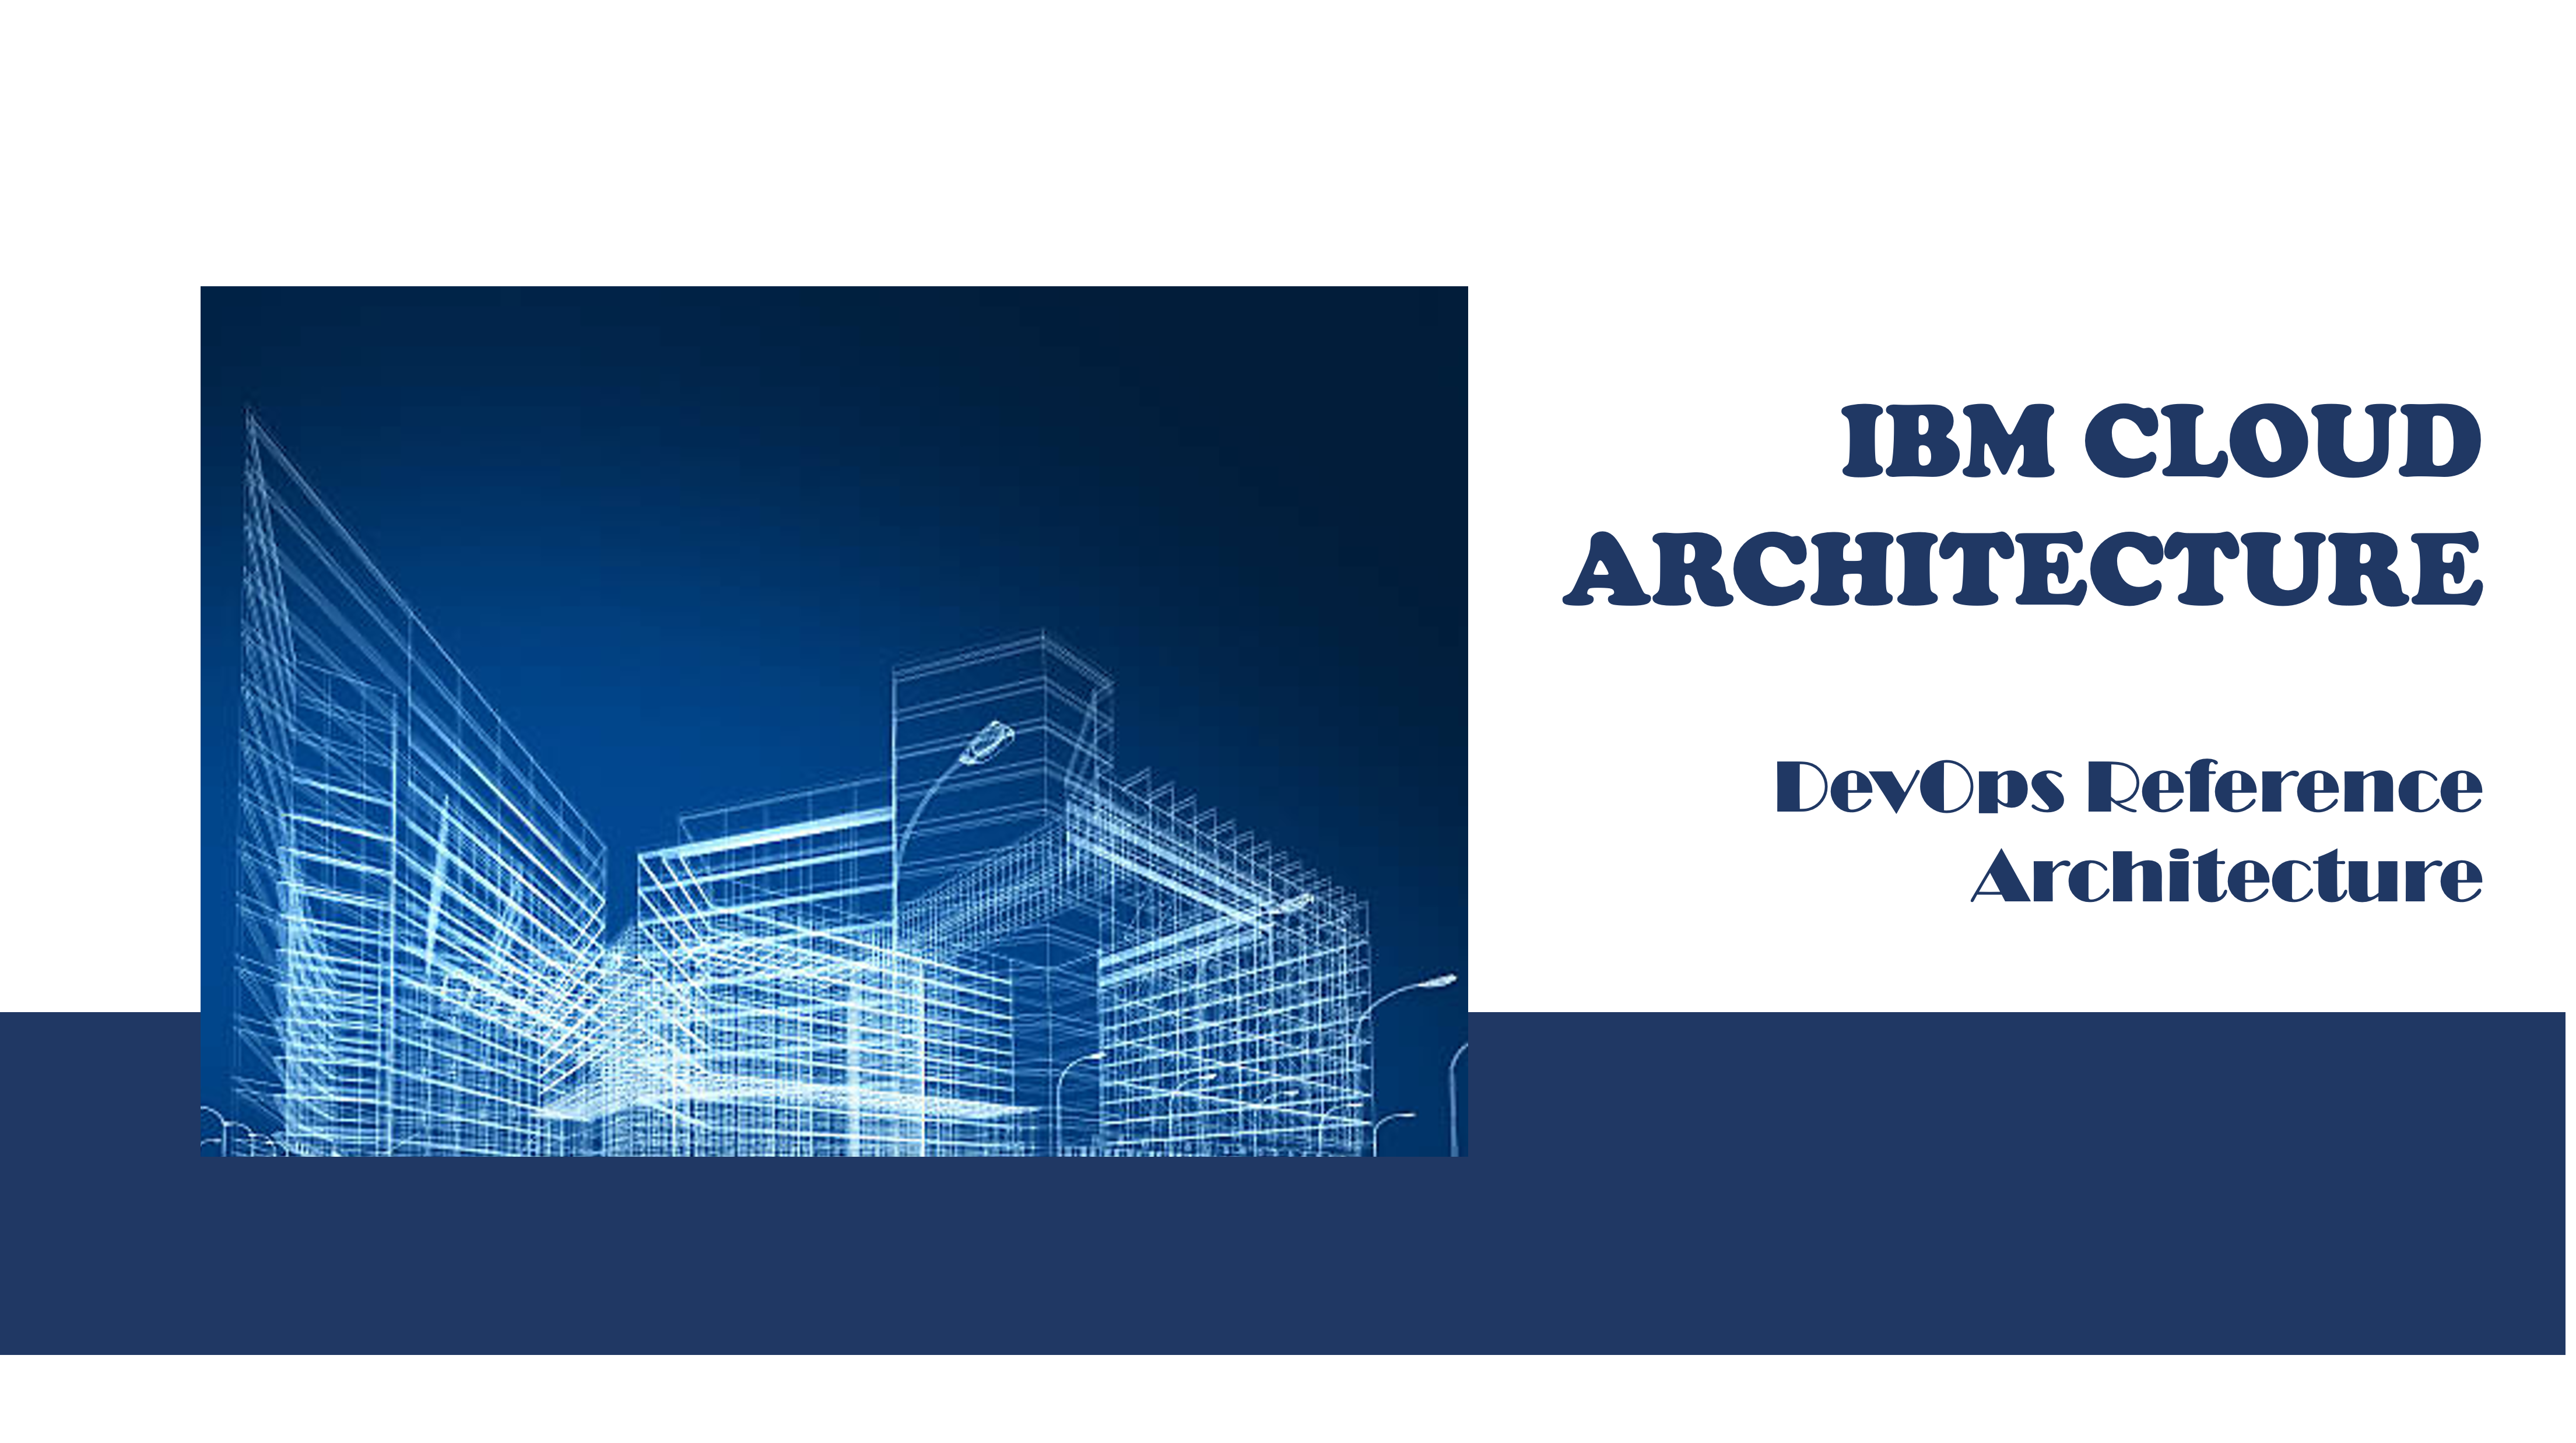 IBM Cloud Architecture Center - DevOps Reference Architecture